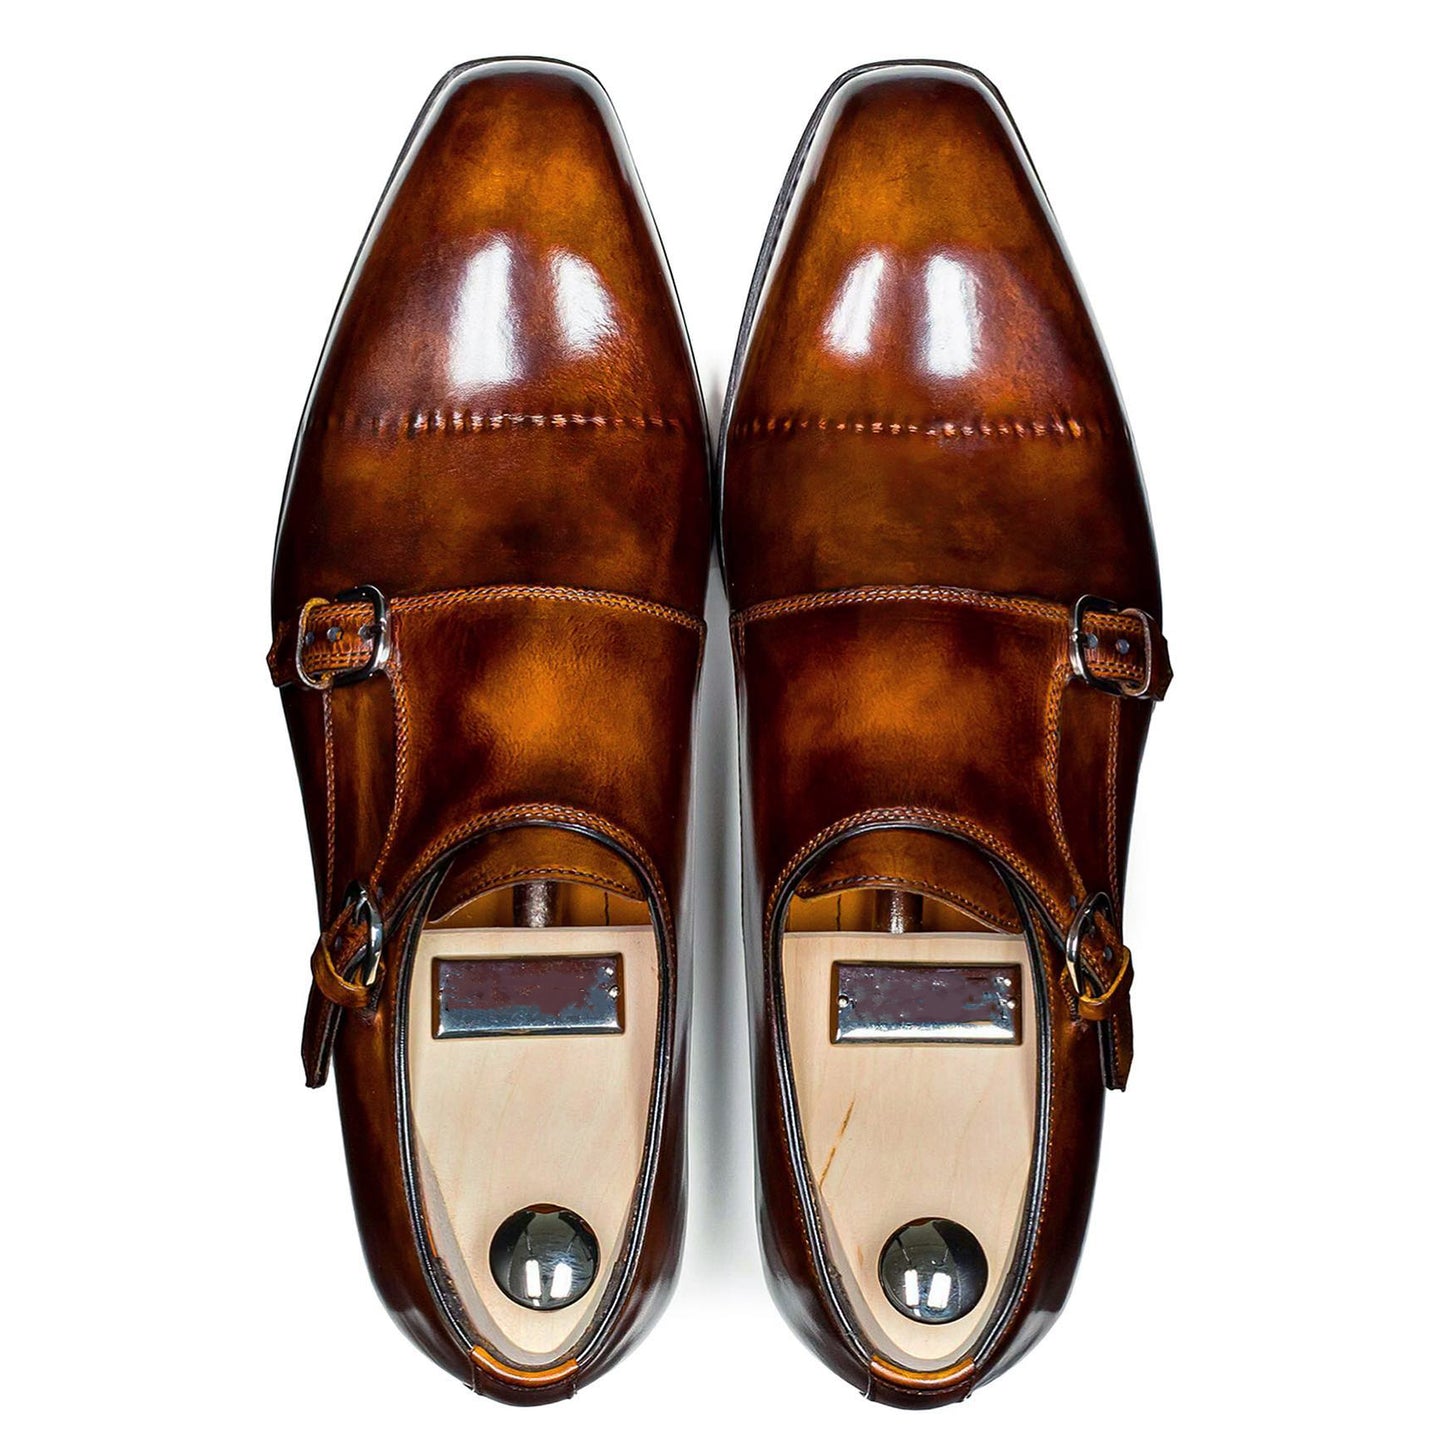 Classic tan two cap toe stitch monk shoes